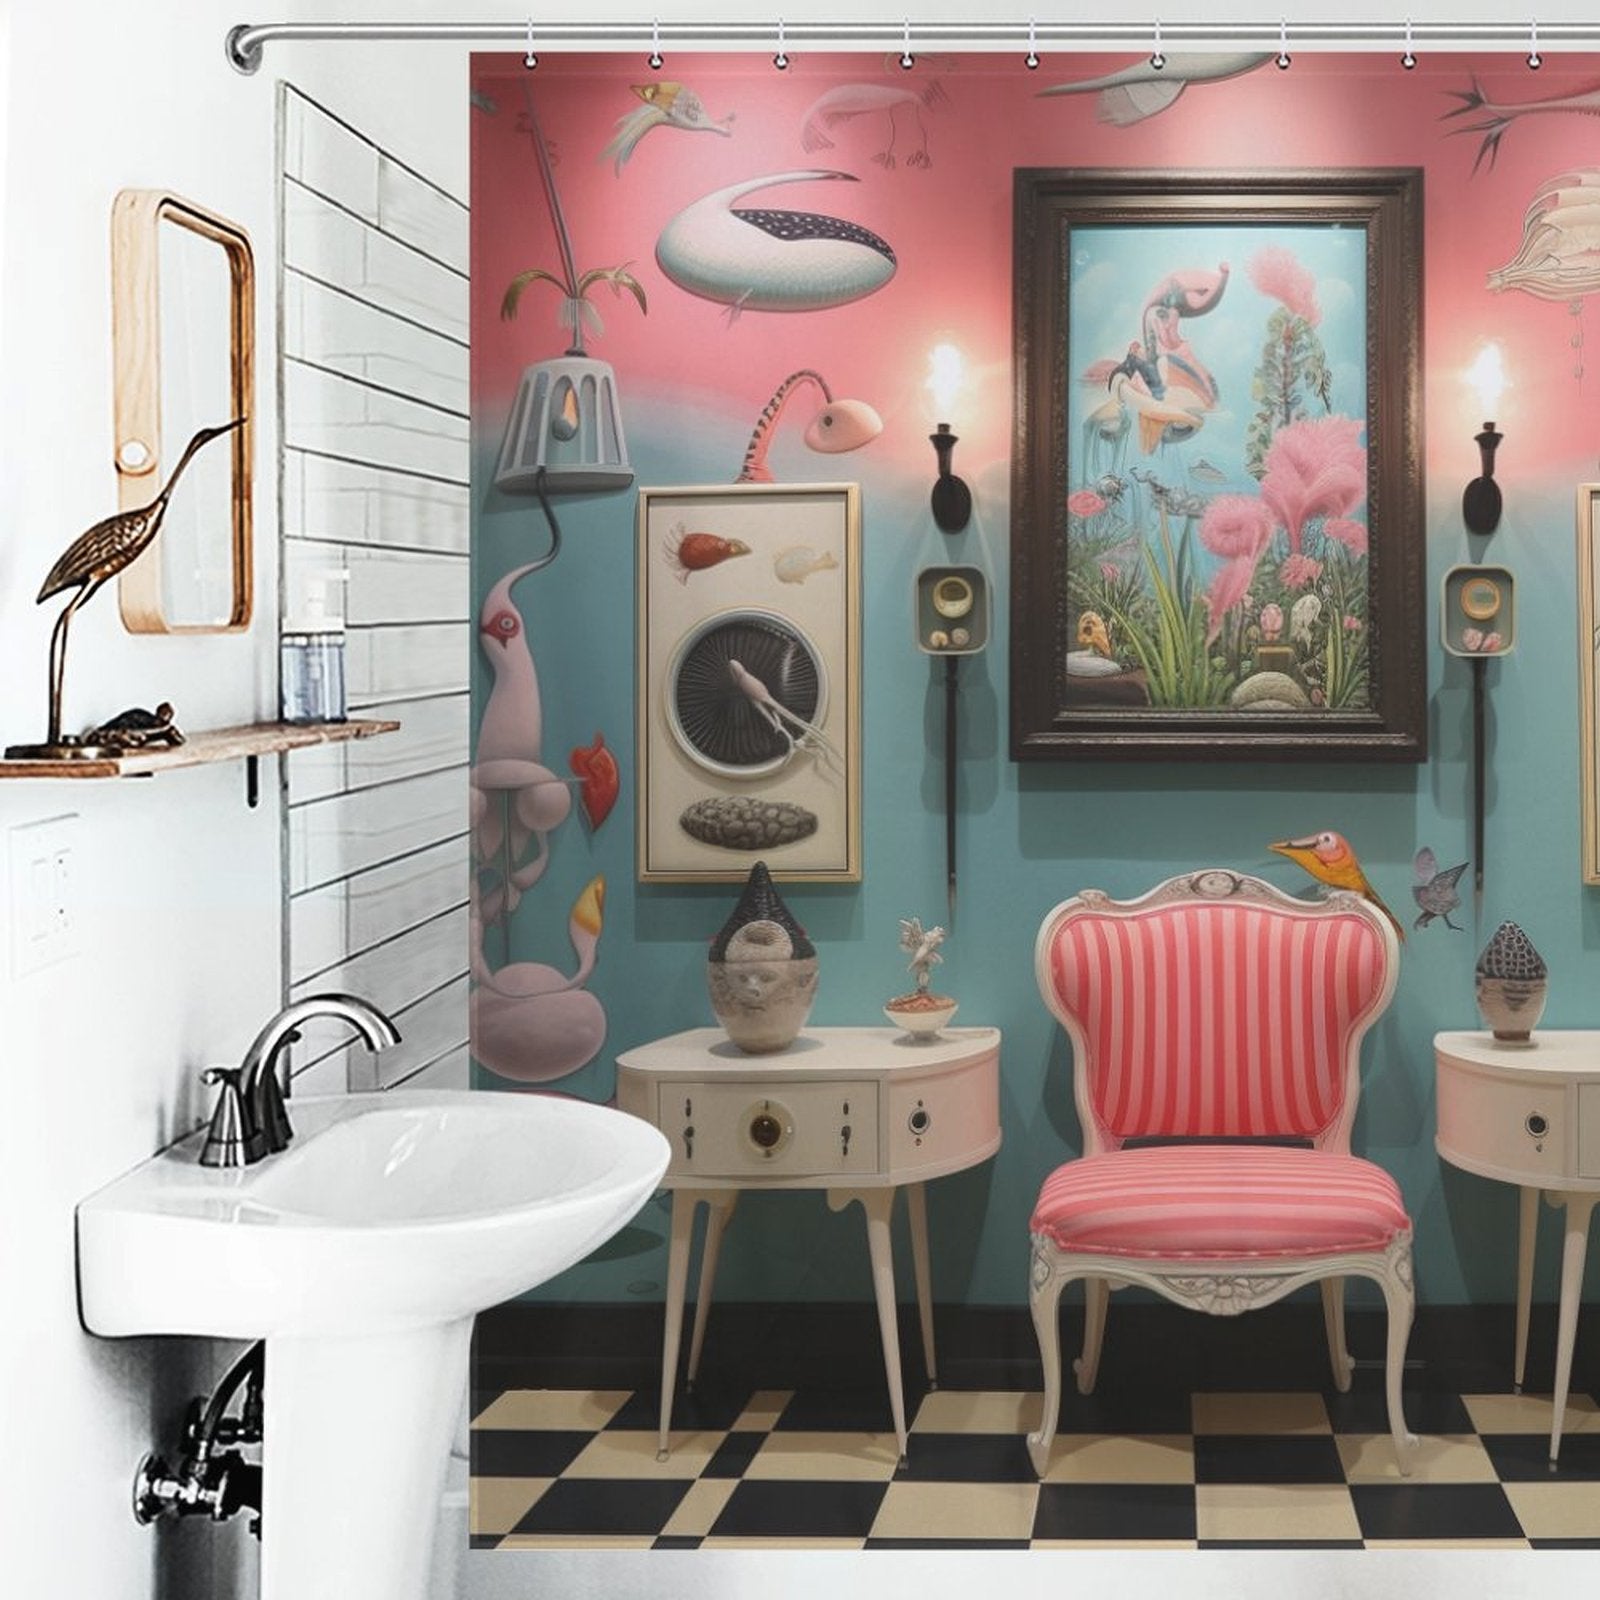 Chic Black & Pink Bathroom Decor